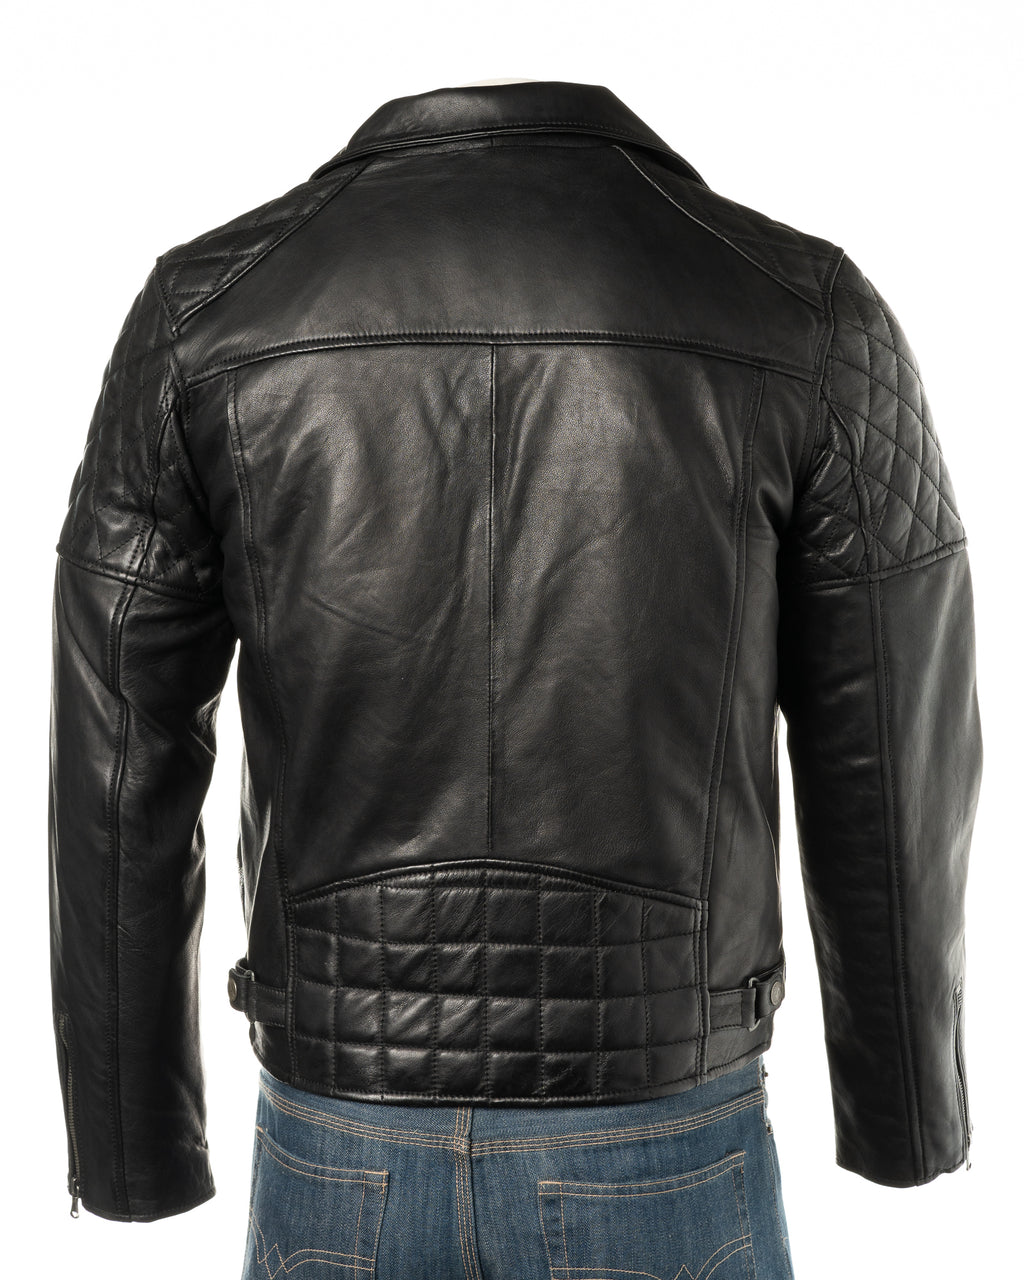 Men's Black Vintage Look Biker Style Leather Jacket: Gaetano